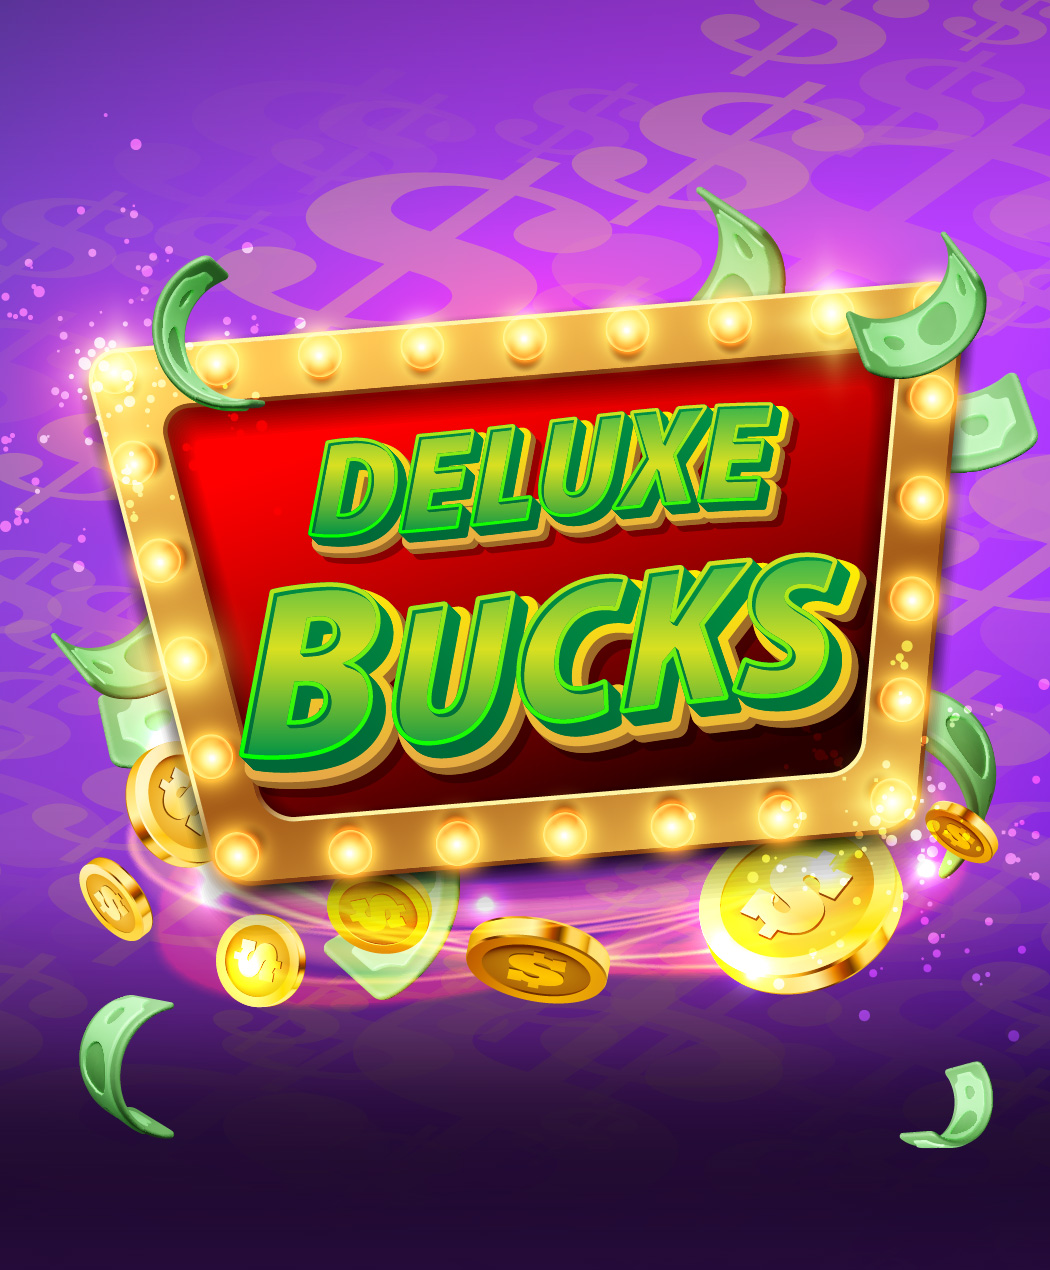 Deluxe Bucks Hot Seat Aug 17